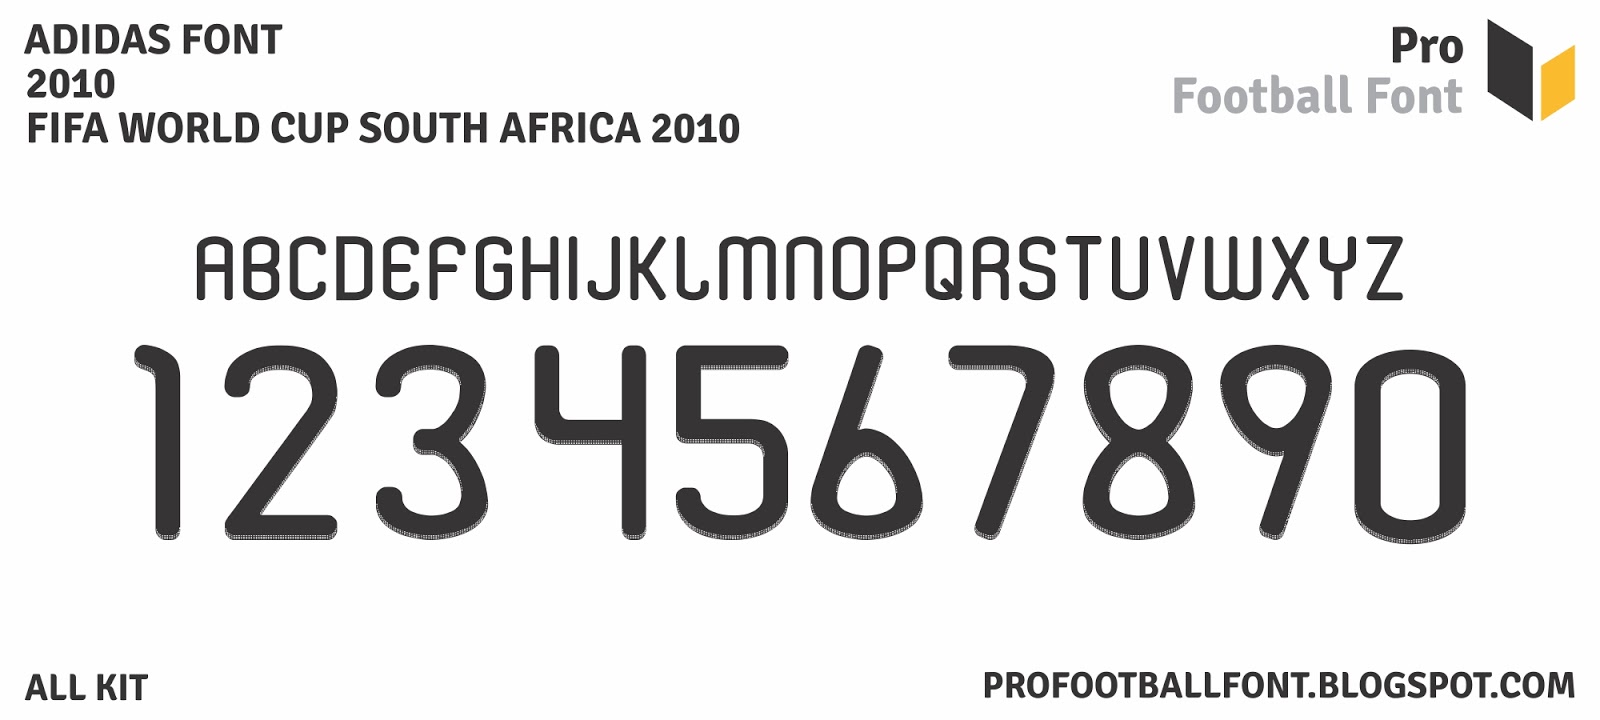 Шрифт адидас. Фирменный шрифт адидас. Adidas font 2010. Adidas World 2010 font. Unquiet шрифт кап кут